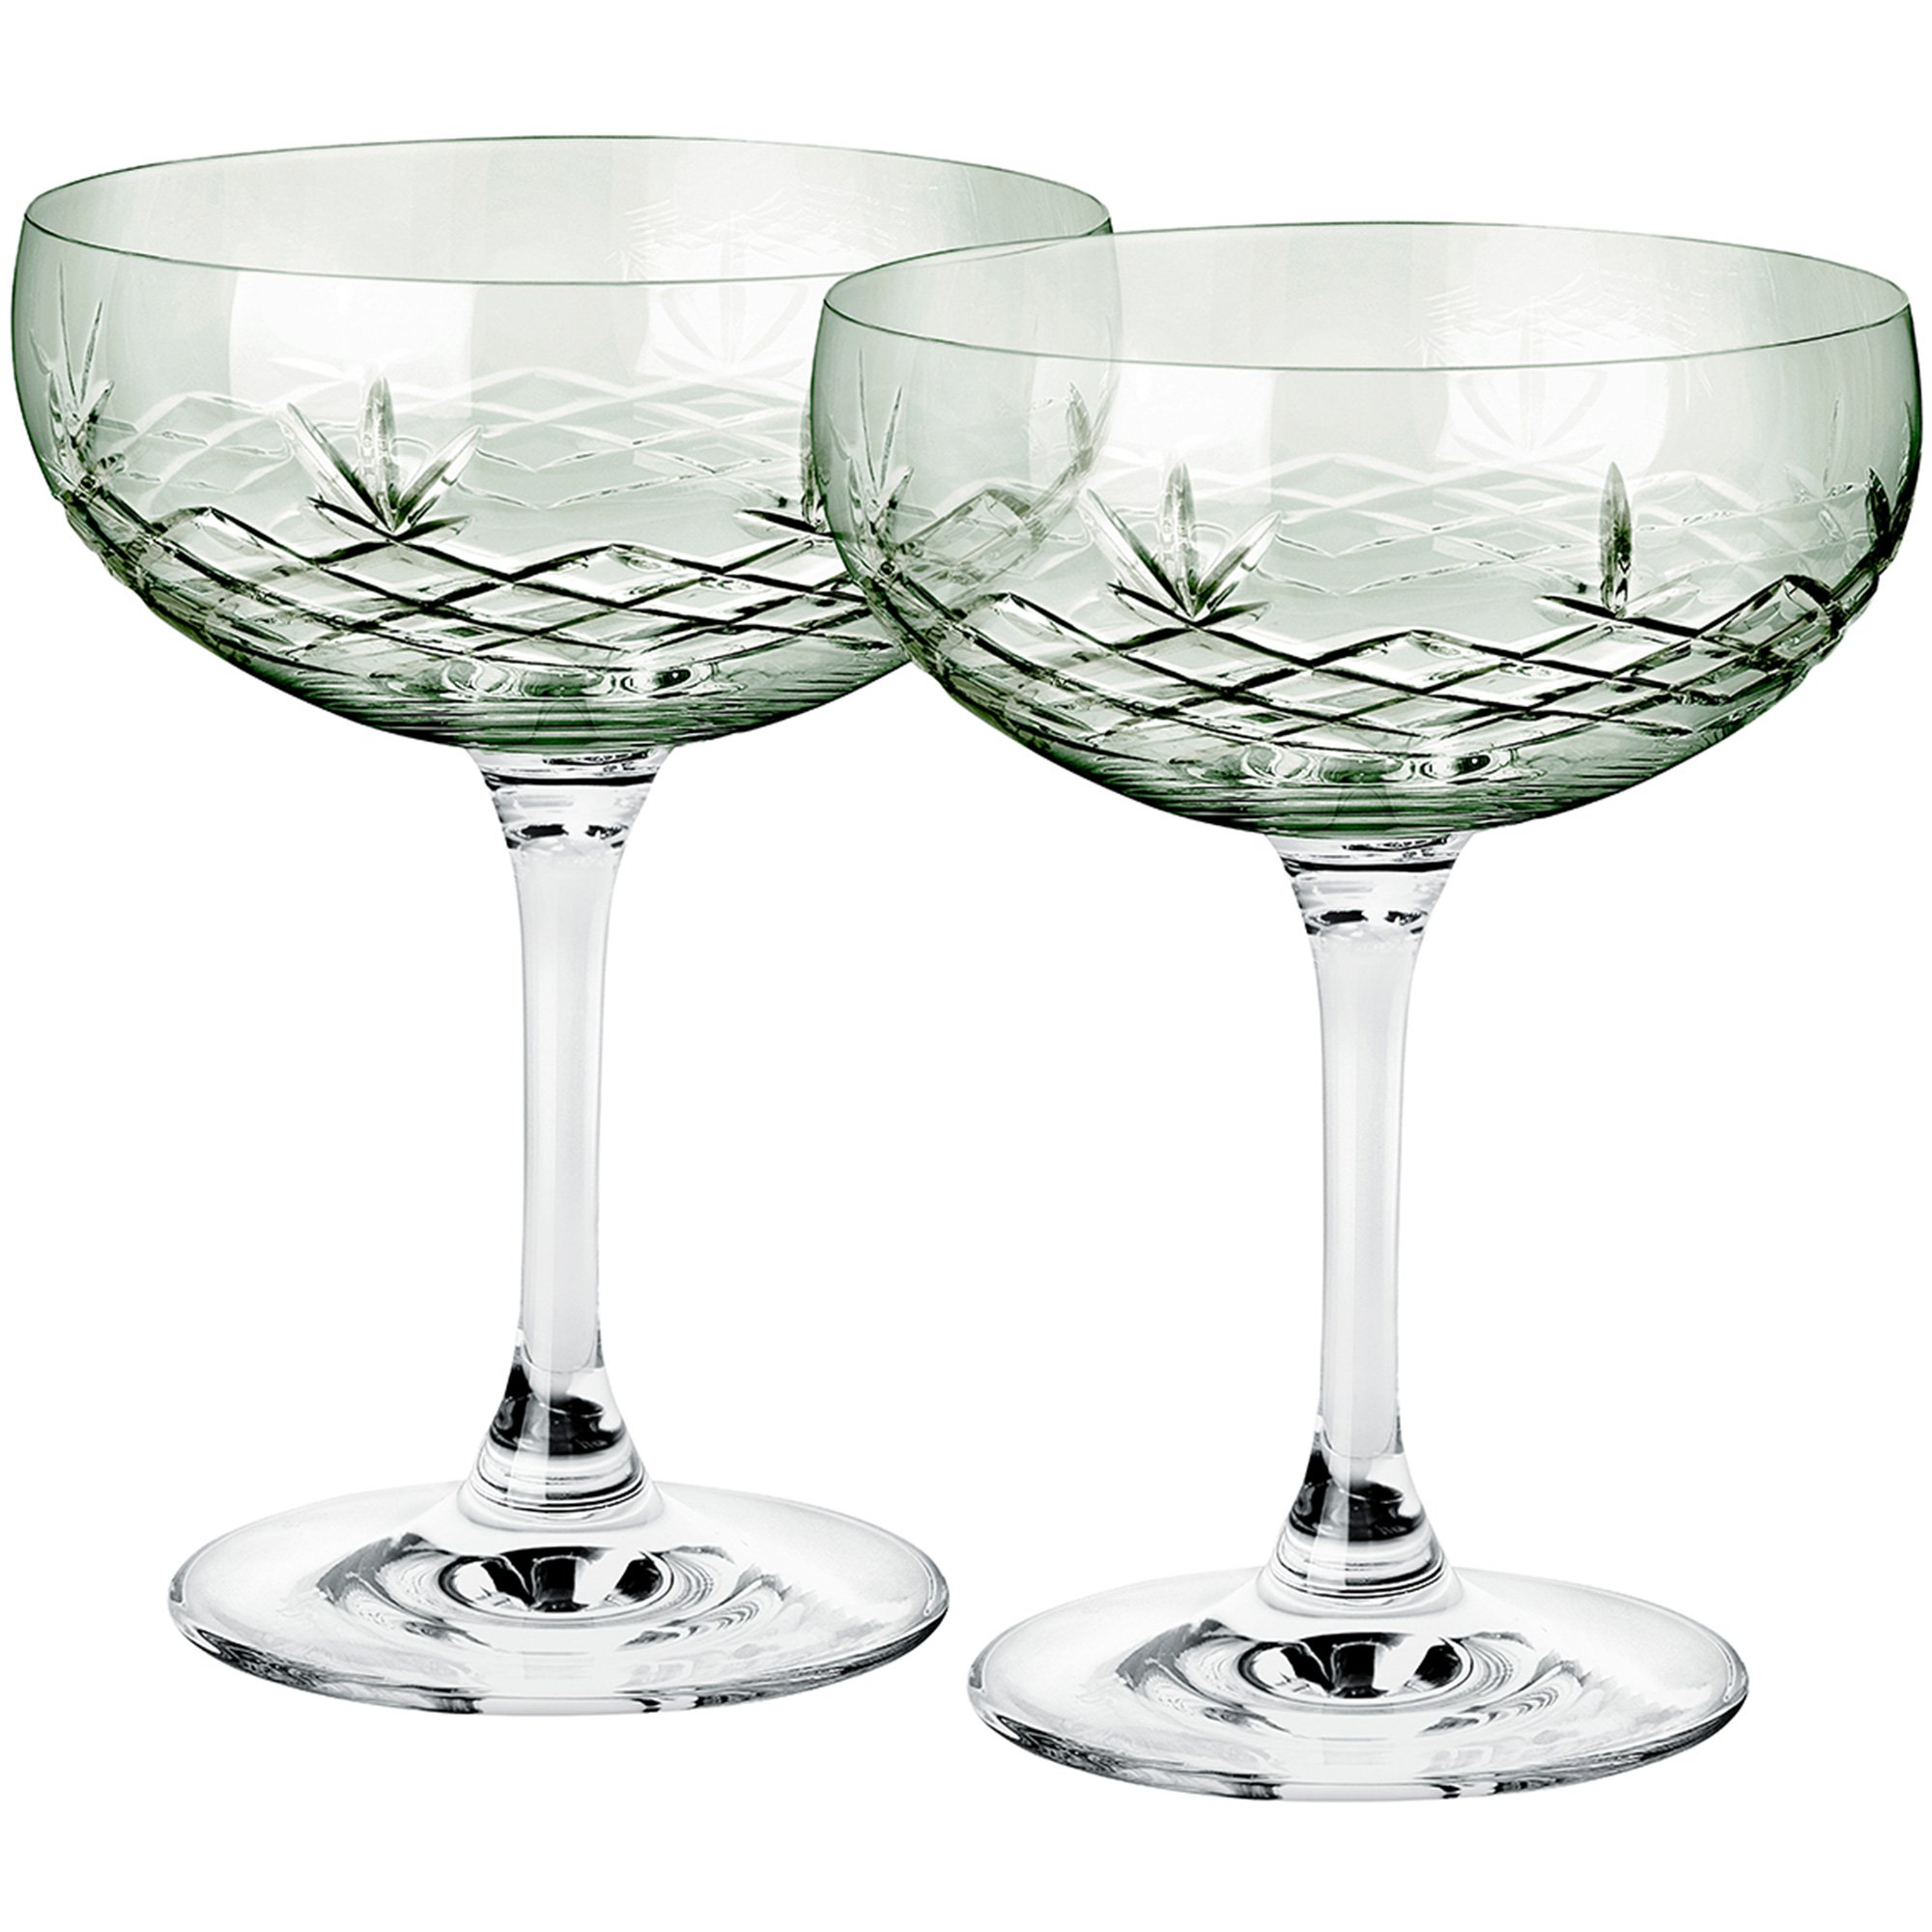 #2 - Frederik Bagger Crispy Gatsby Champagneglas, emerald